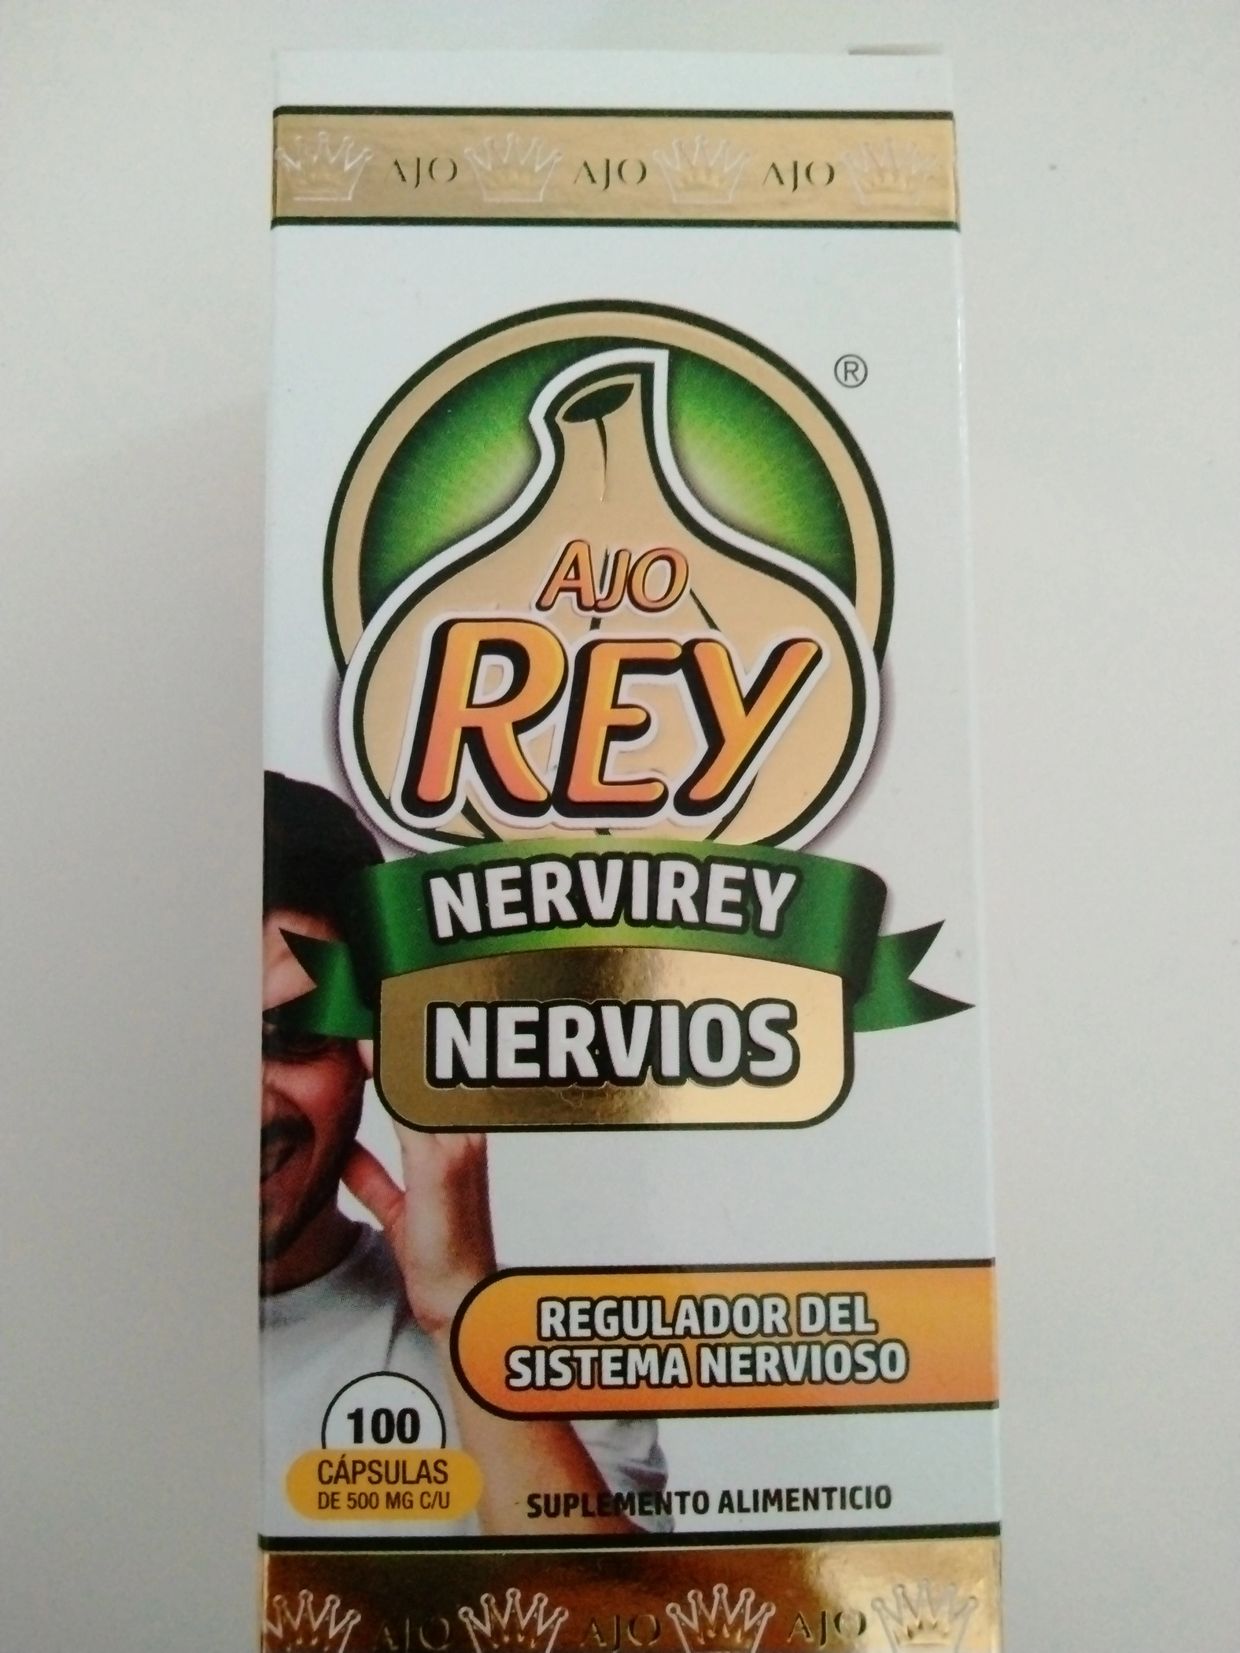 Ajo Rey Nervirey